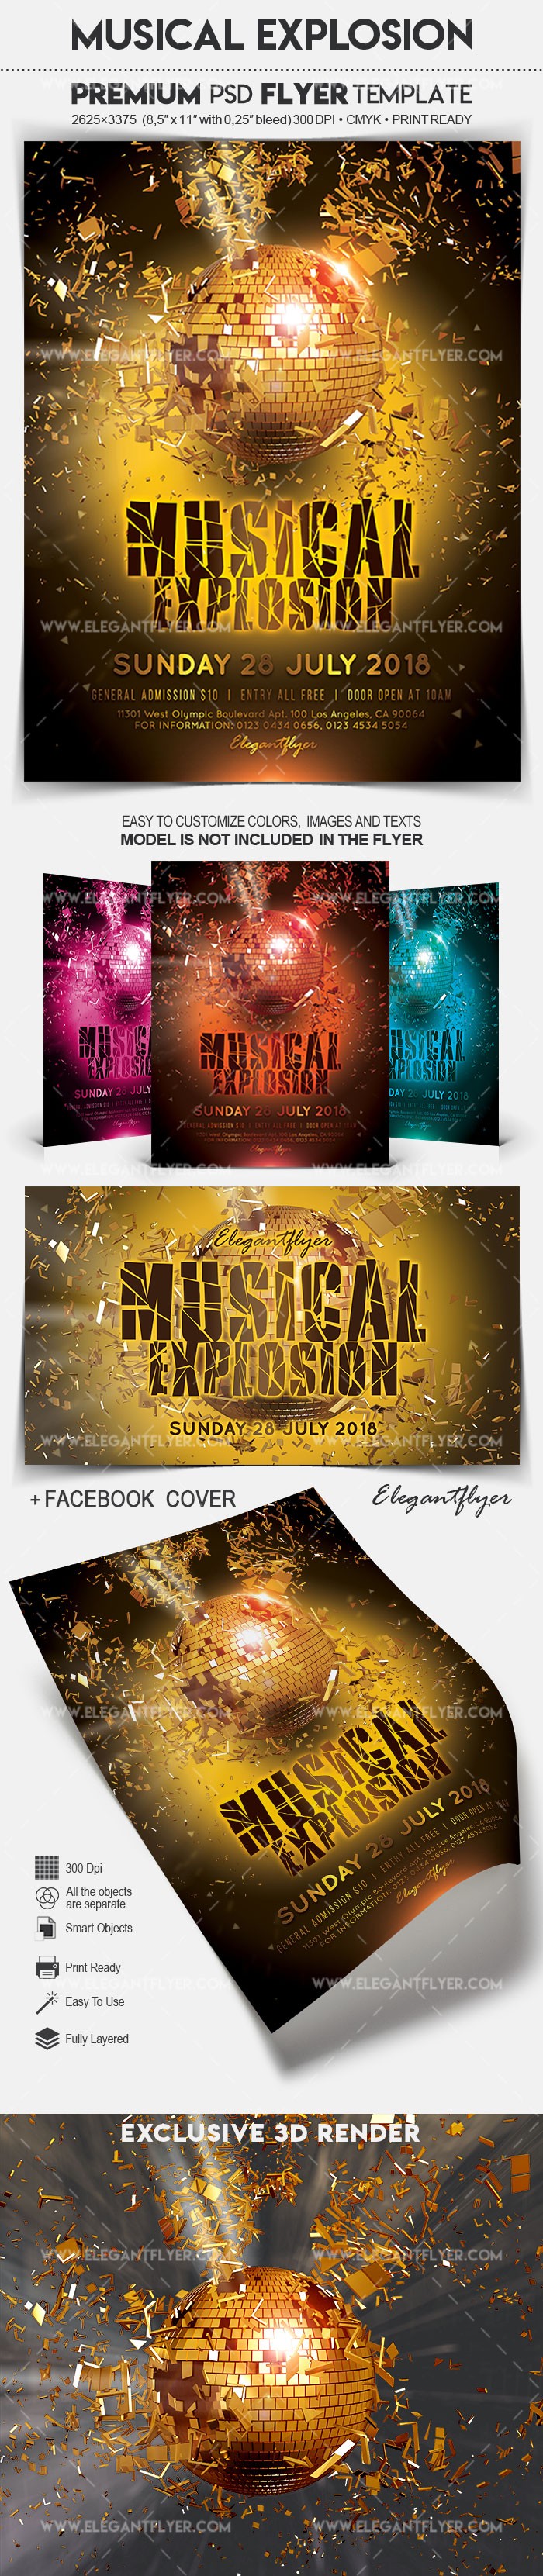 Musical Explosion by ElegantFlyer